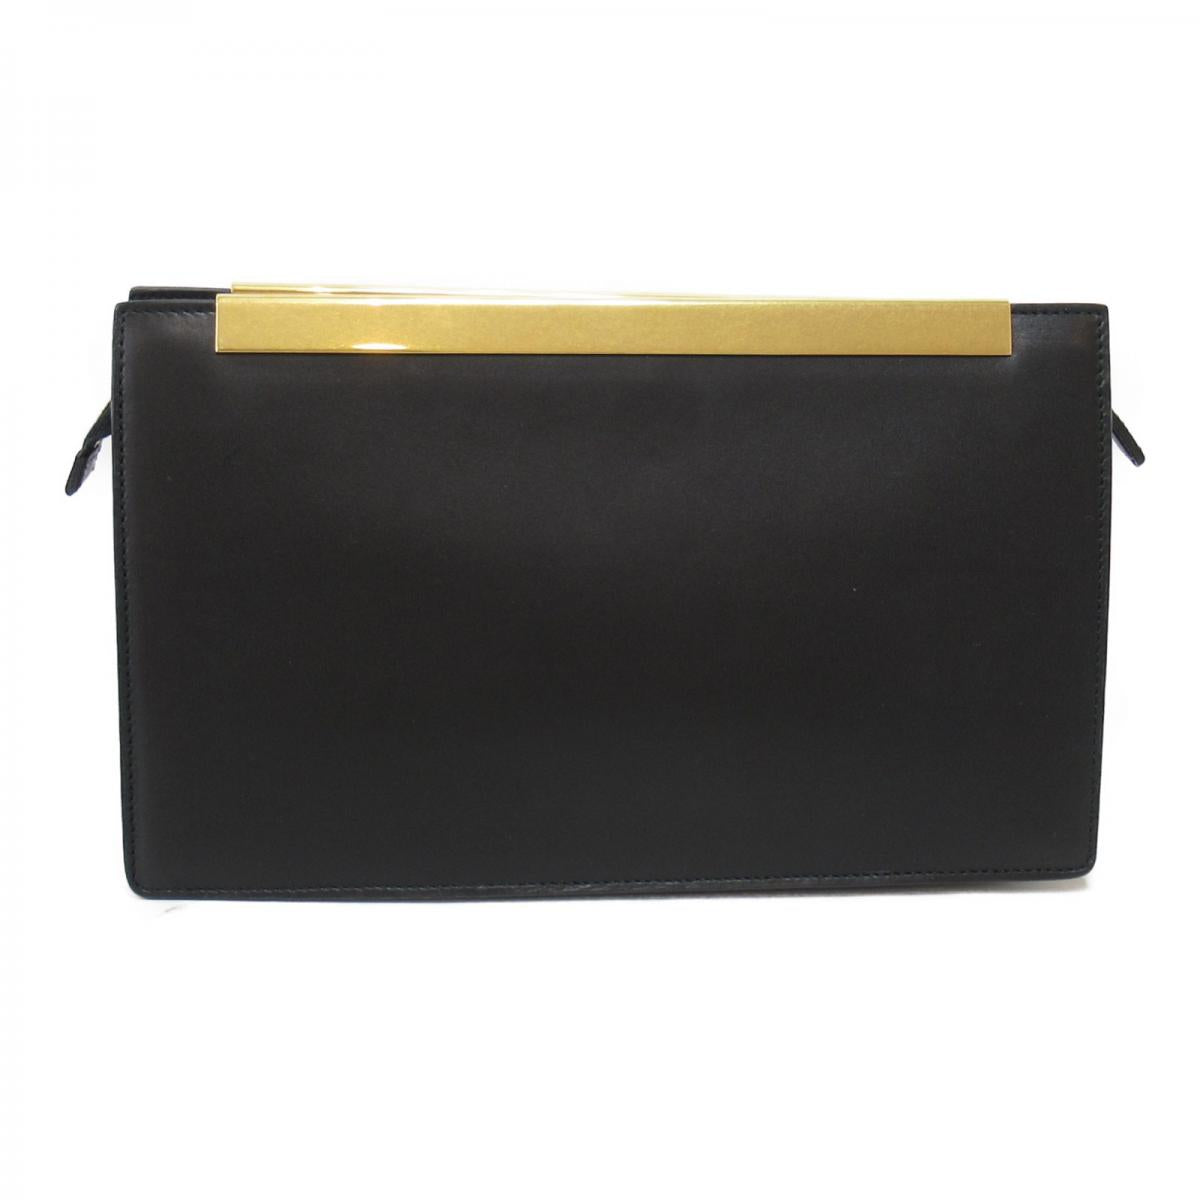 Leather Clutch Bag 314527